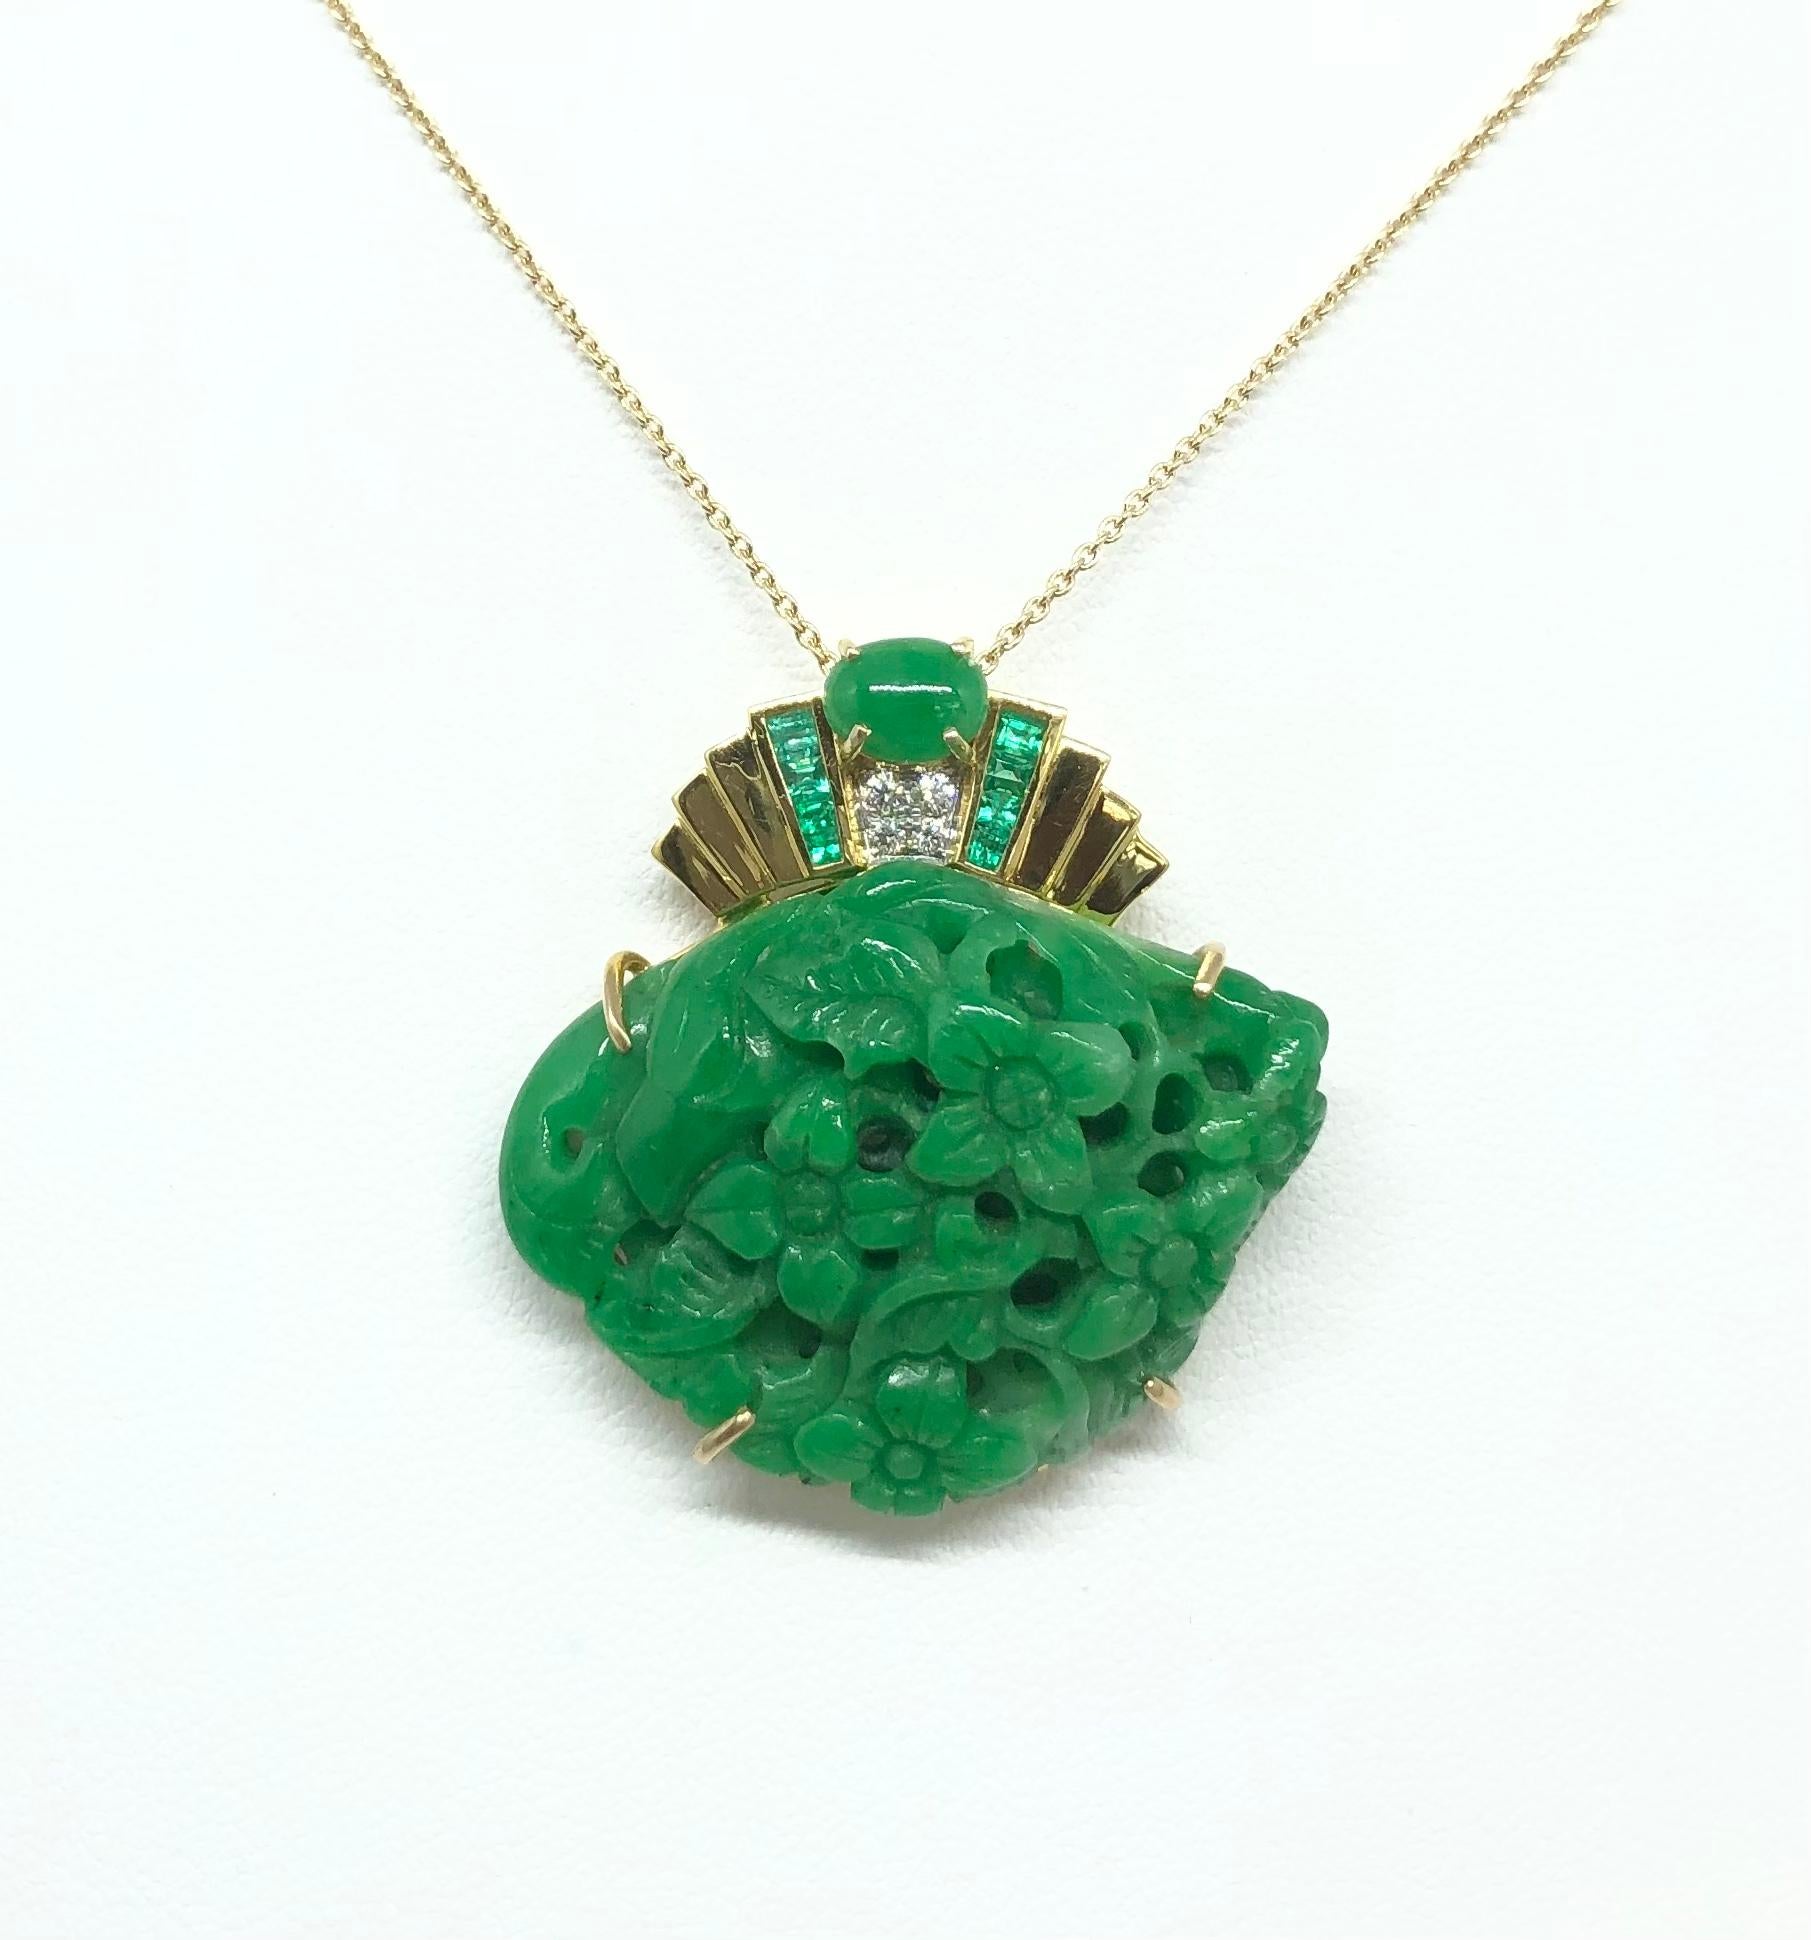 Jade 39.14 carats, Jade 0.66 carat, Emerald 0.29 carat and Diamond 0.06 carat Pendant set in 18 Karat Gold Settings
(chain not included)

Width: 3.0 cm 
Length: 3.1 cm
Total Weight: 11.21 grams

